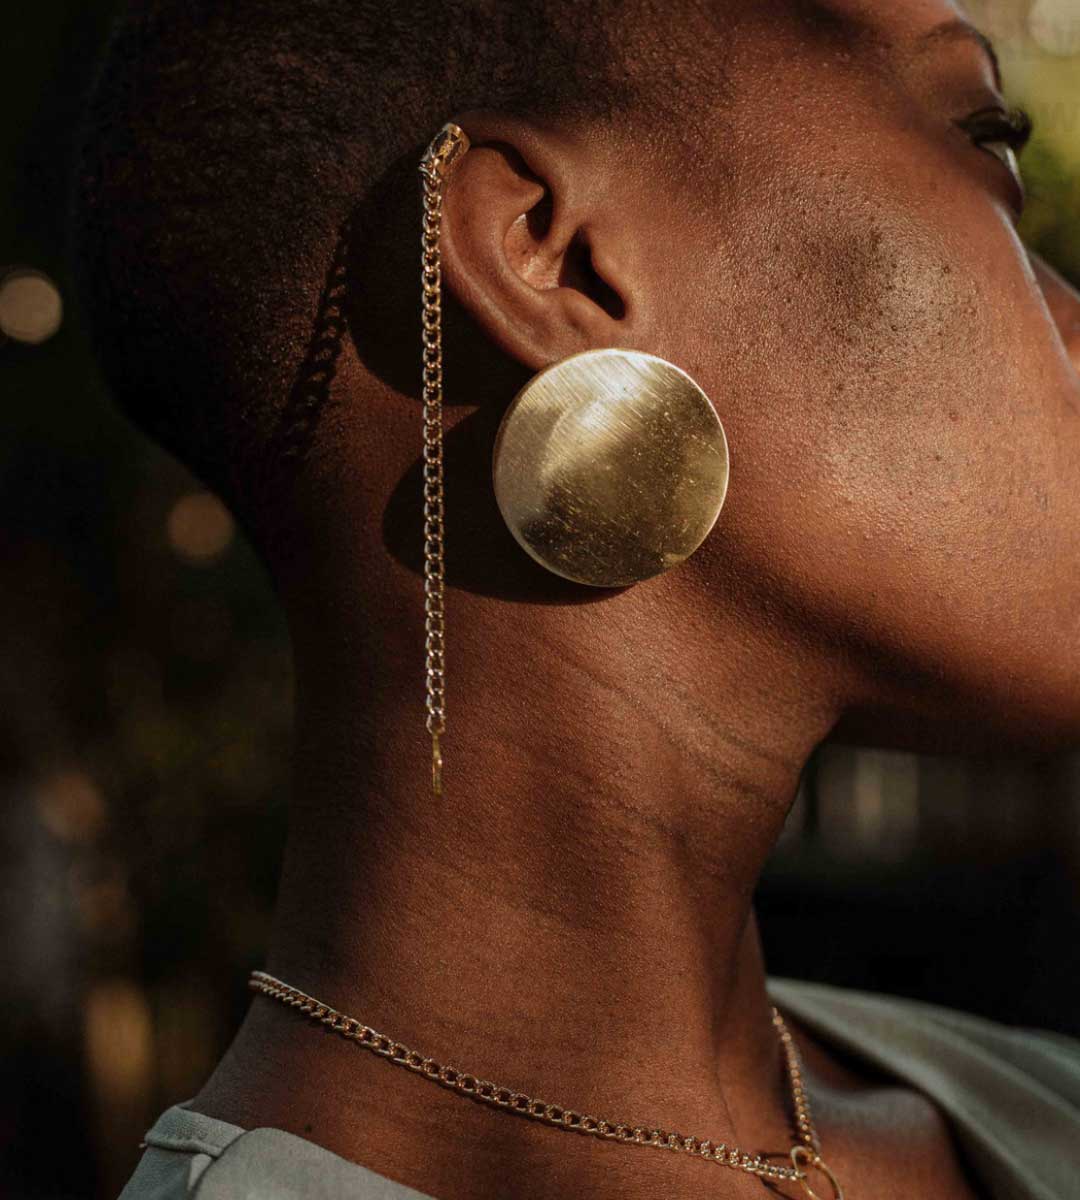 Handmade brass earrings and chain